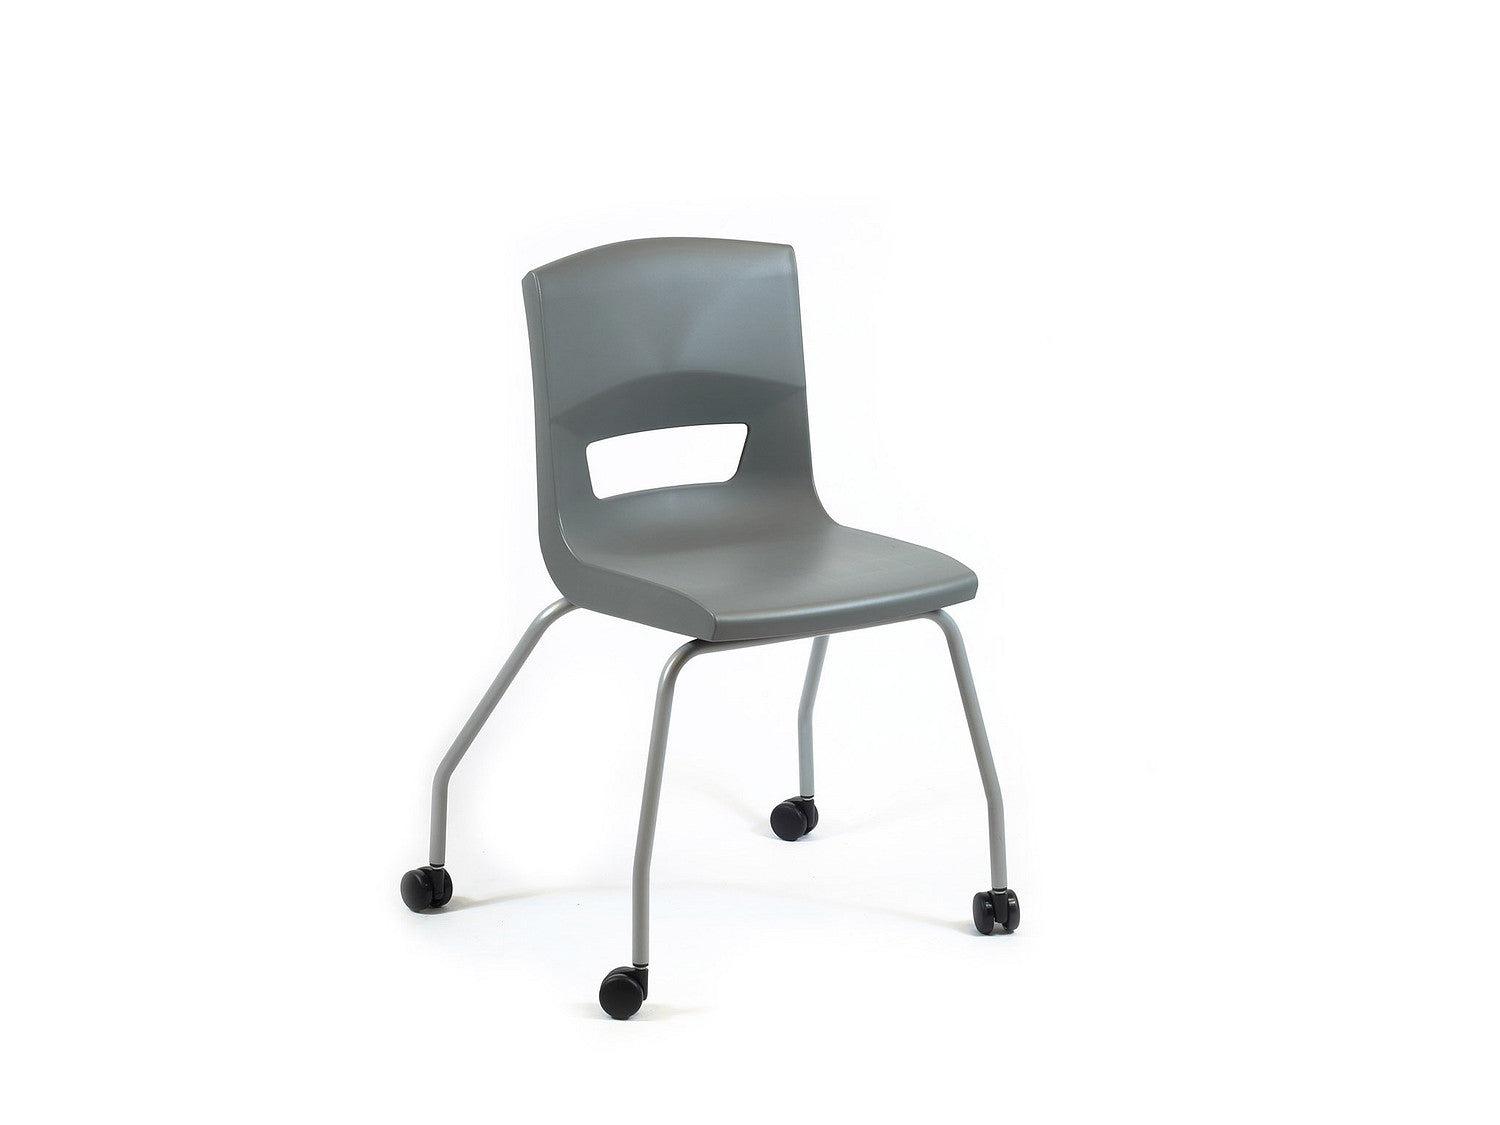 Postura 4 legs on castor unique stlye classroom chair silver iron grey